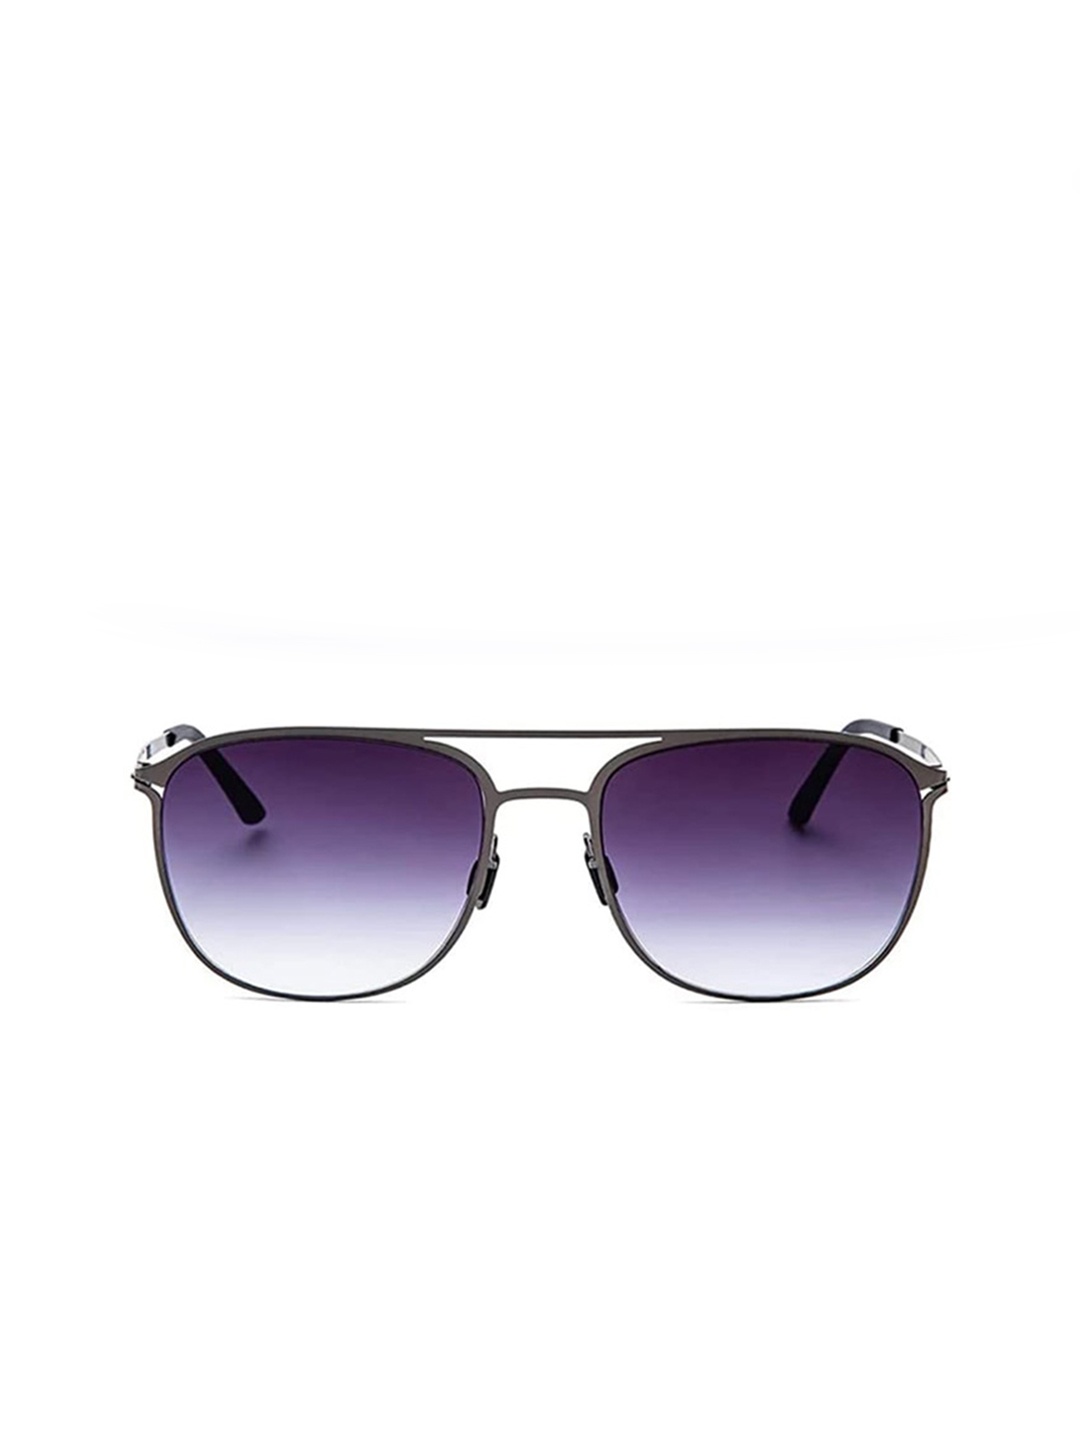 

Intellilens Unisex Round Sunglasses with Polarised Lens, Purple